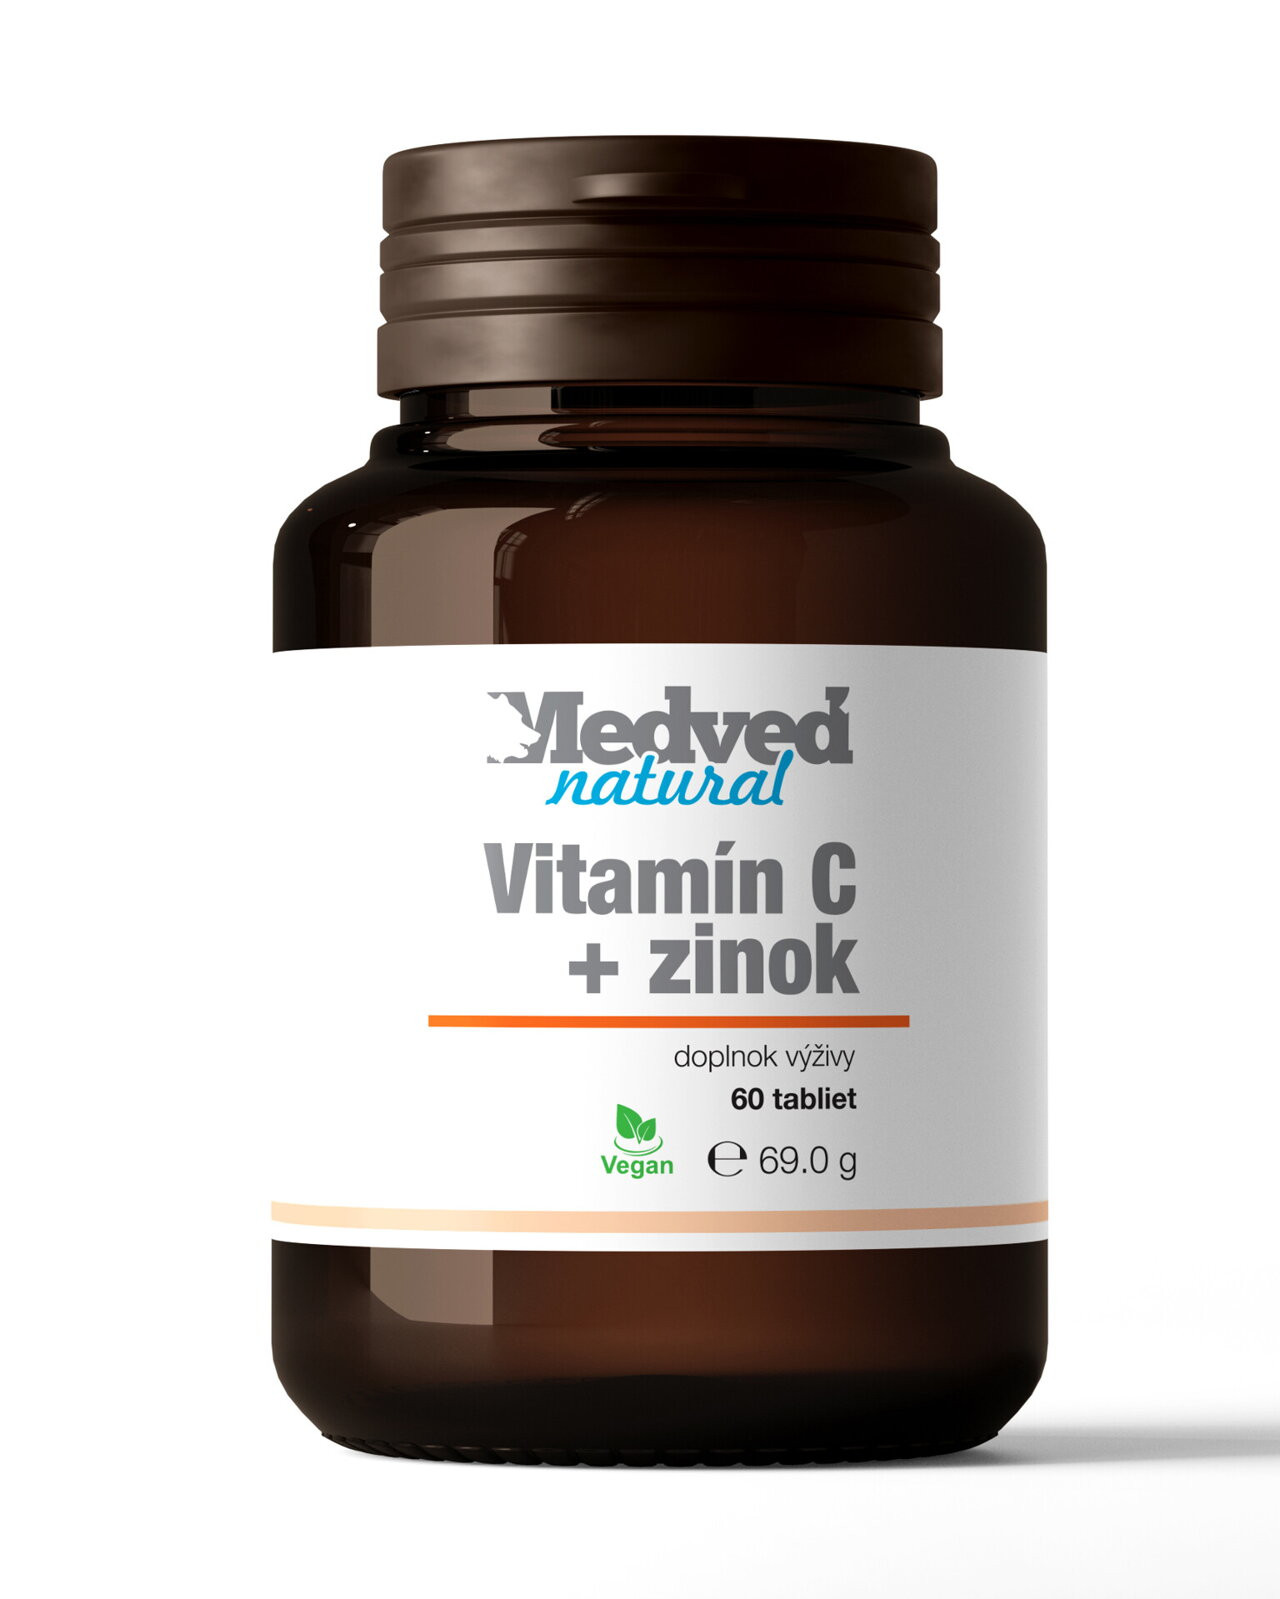 Vitamín C + zinok medveď natural